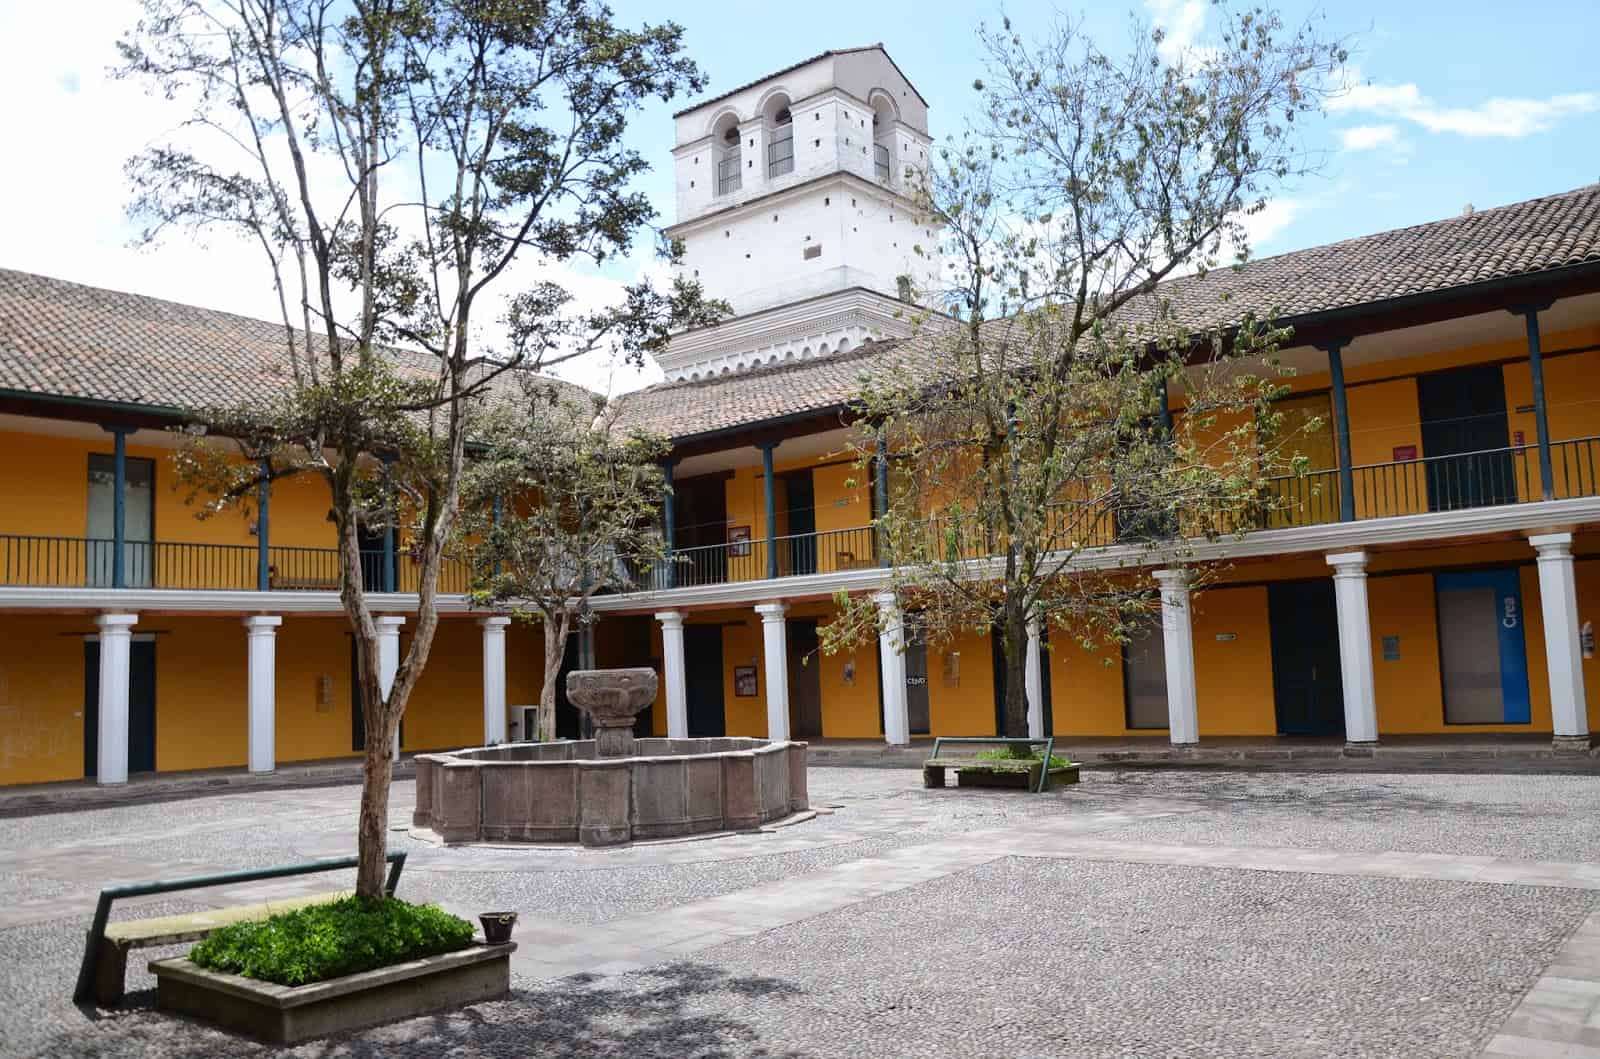 Courtyard of the City Museum in Quito, Ecuador